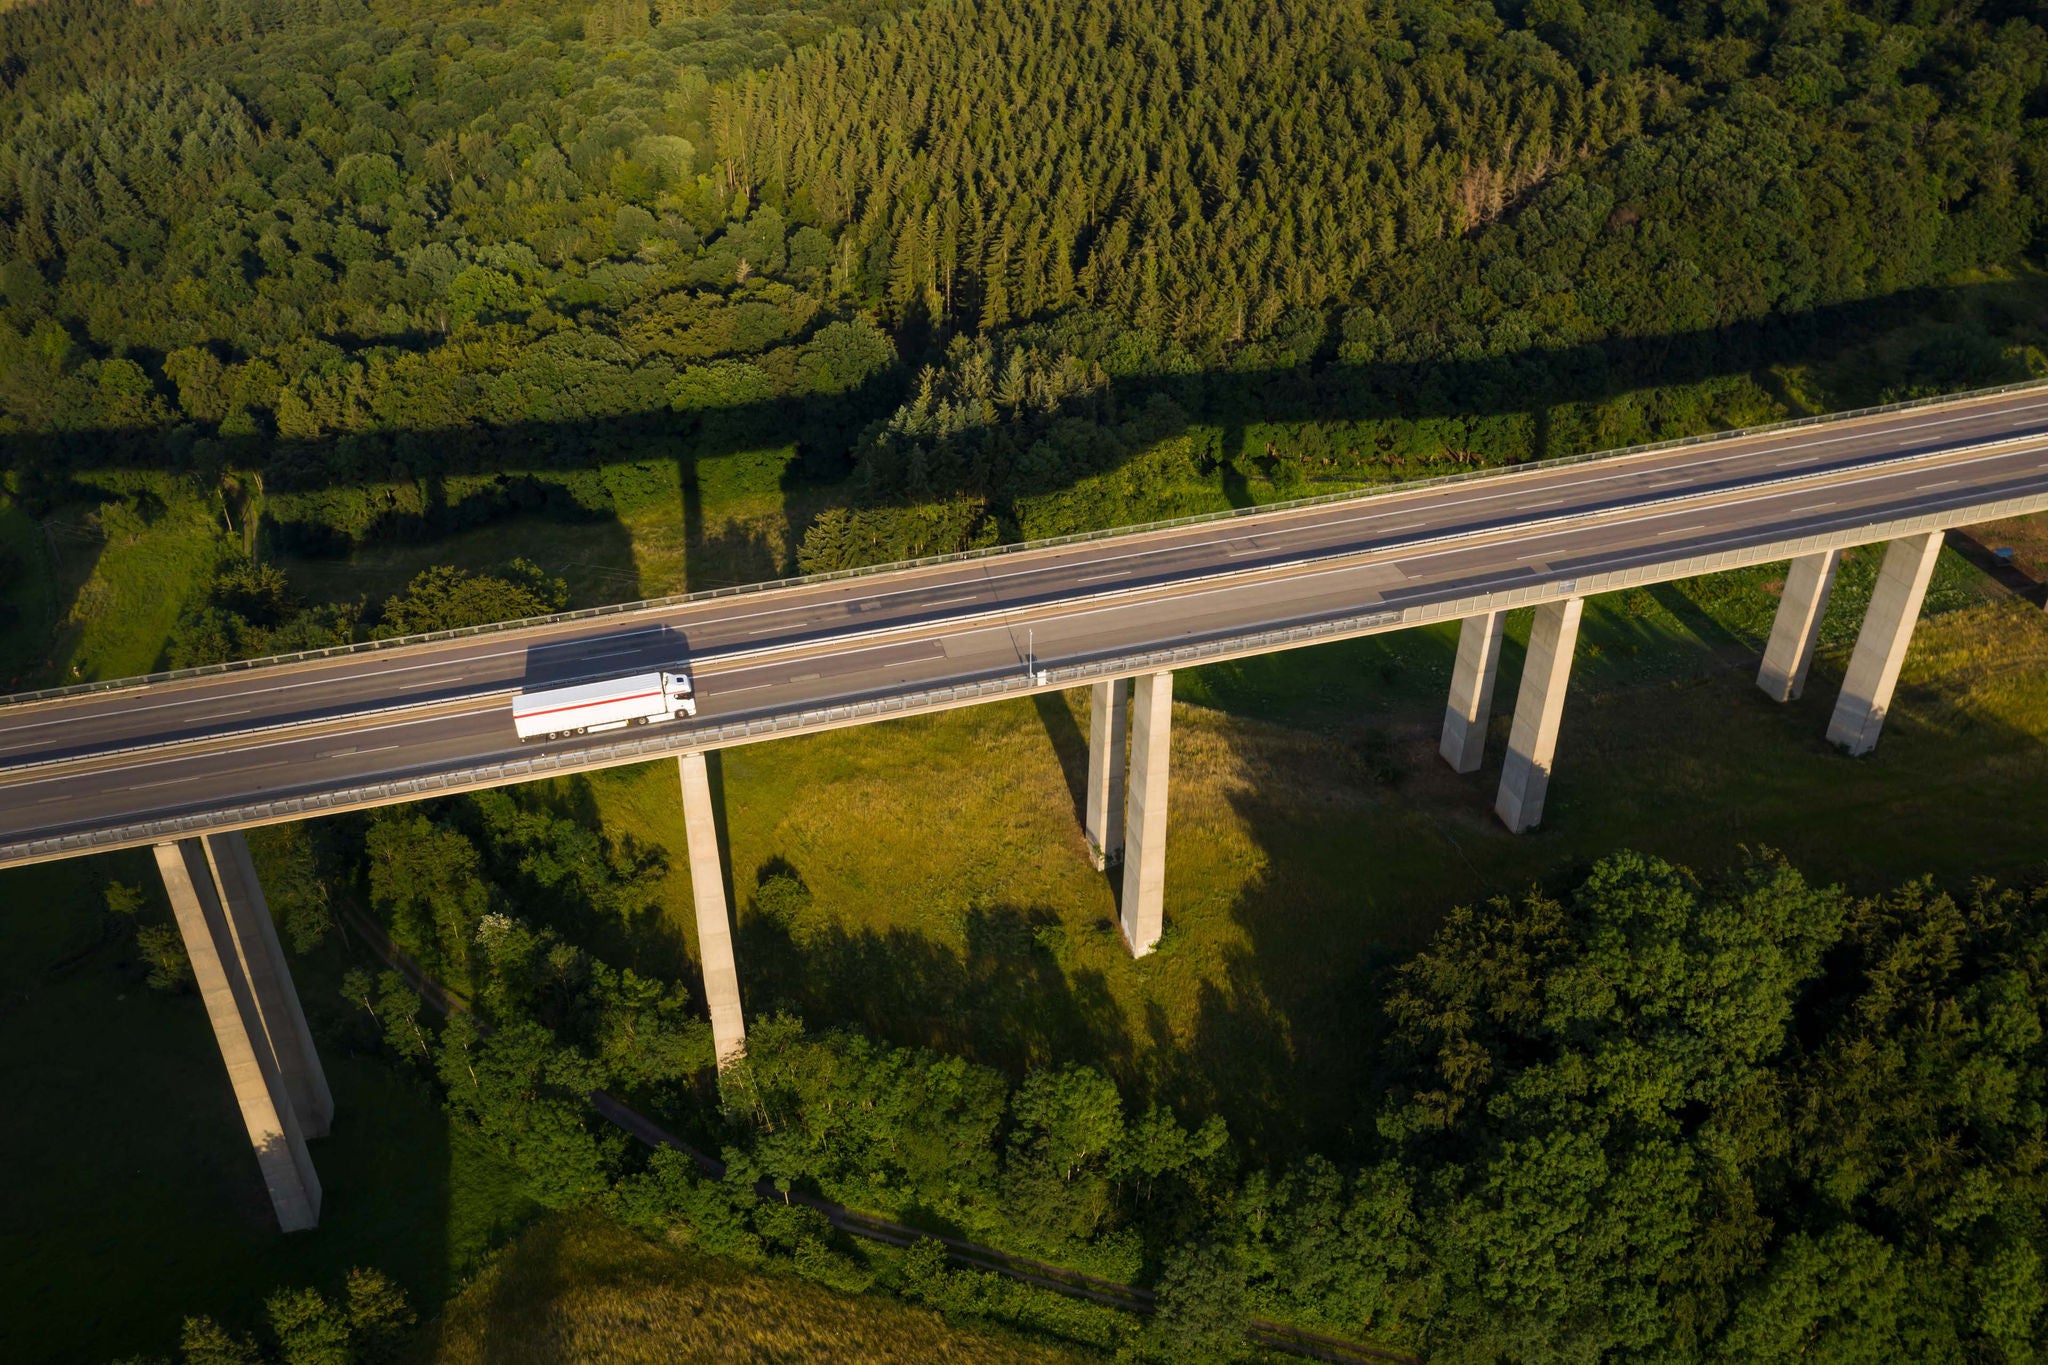 Truck driving on autobahn bridge 